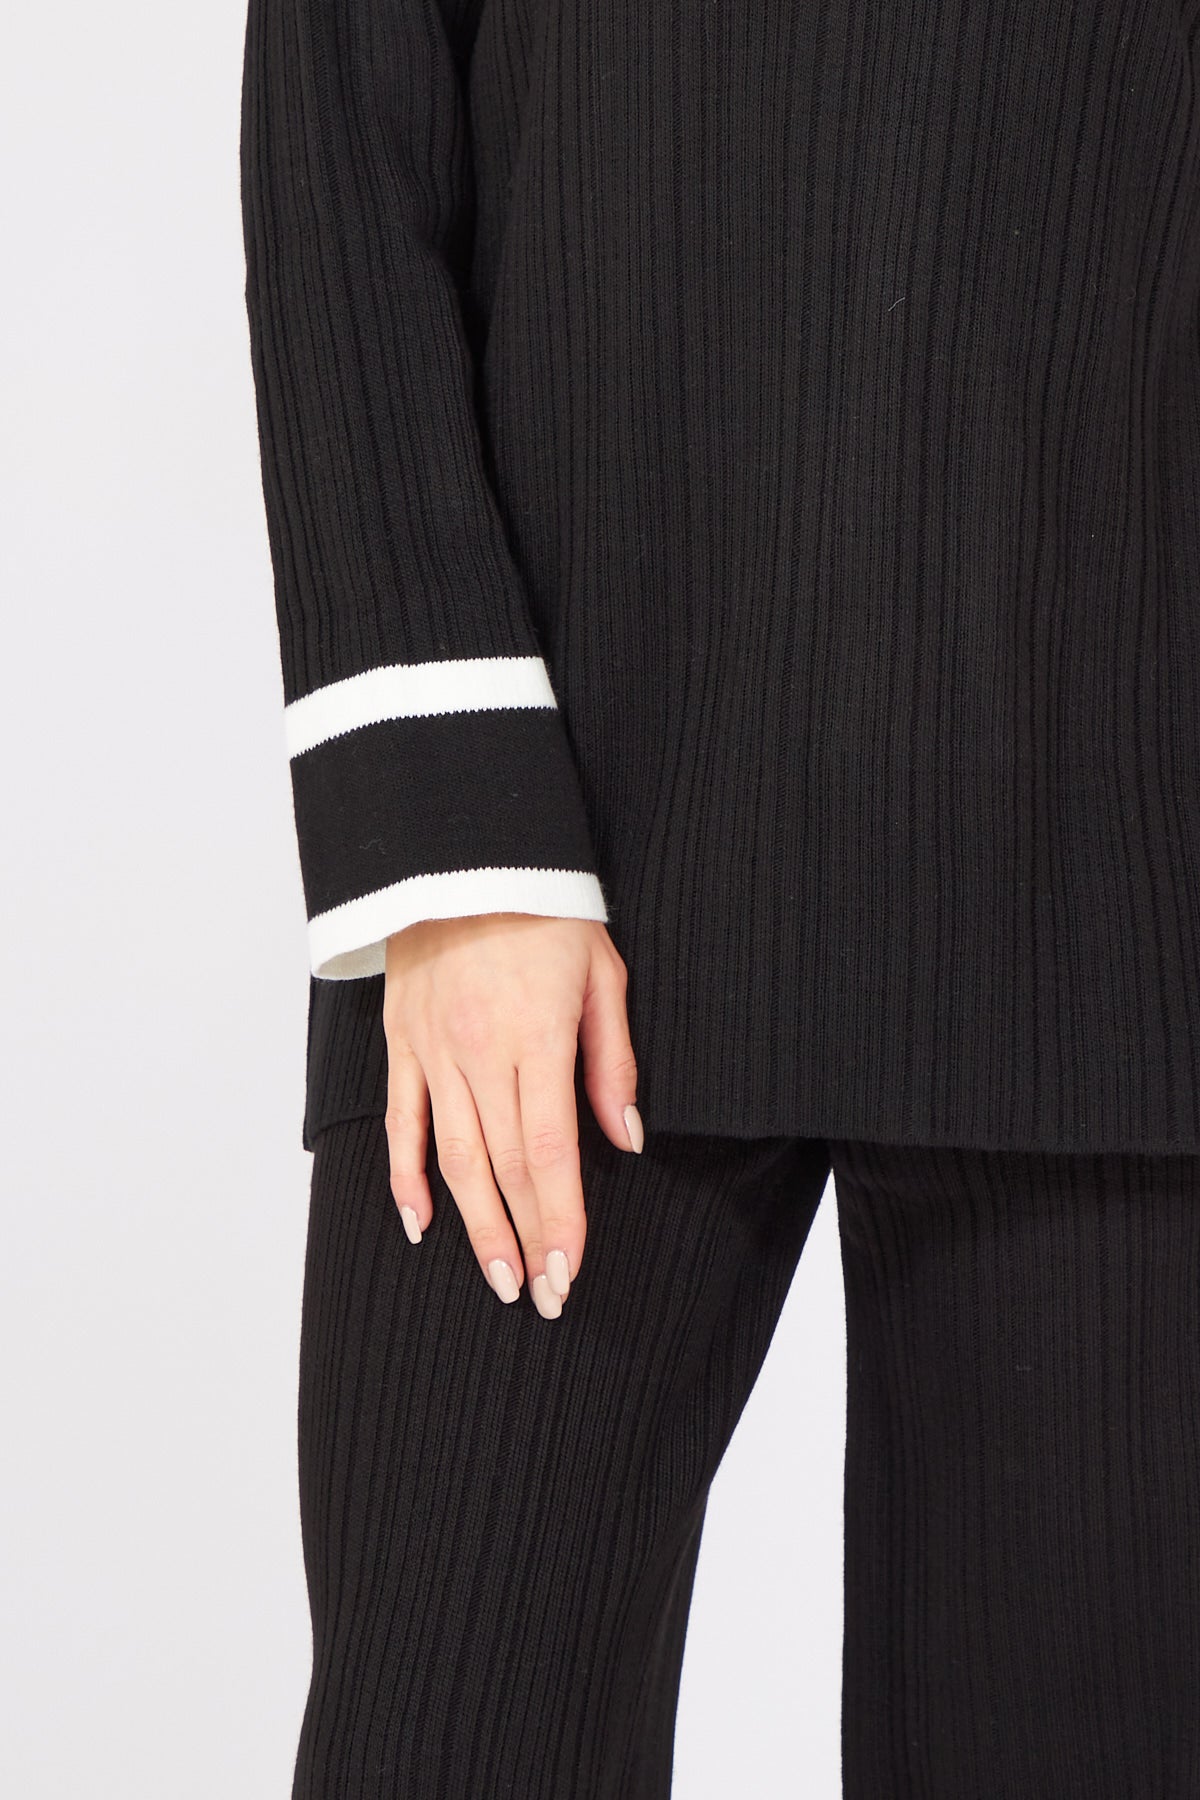 Black white Striped Polo Neck Knitwear Suit - Lebbse